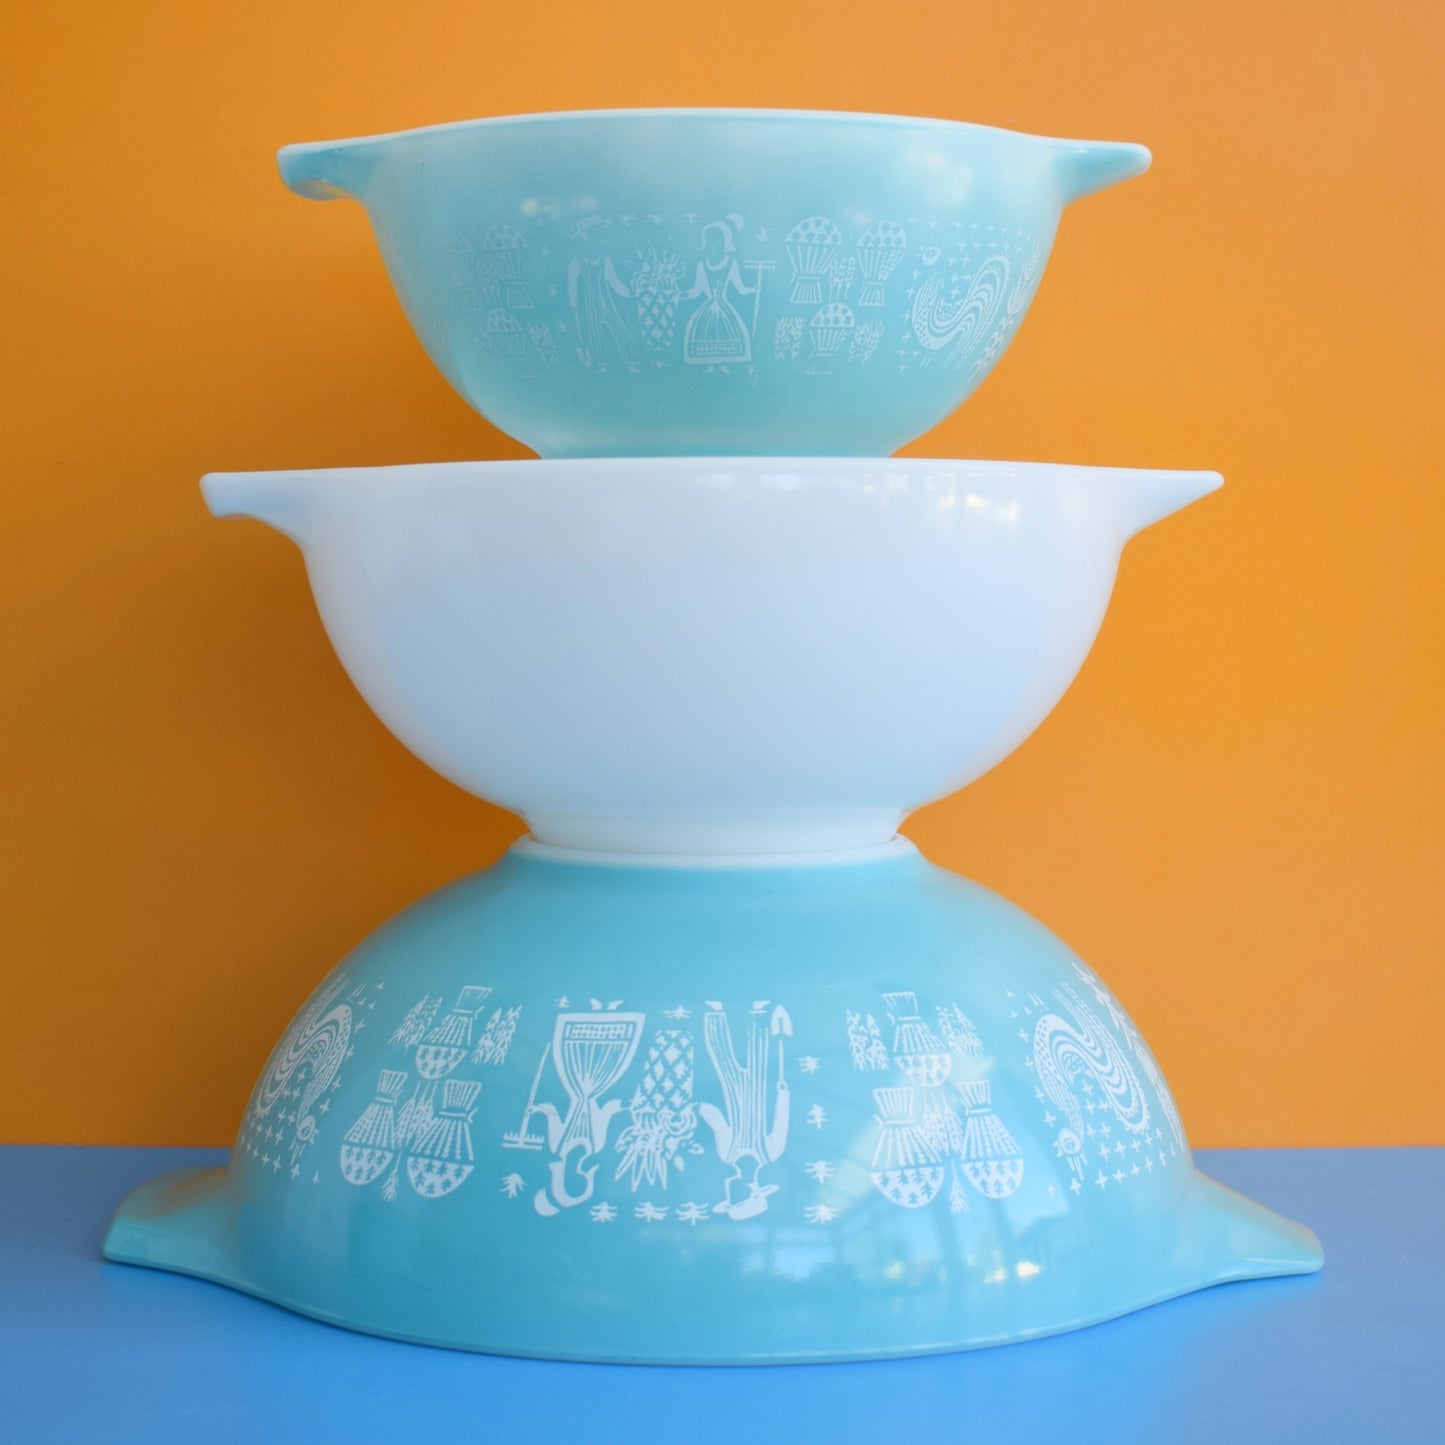 Vintage 1950s Pyrex Glass Bowls - Butterprint